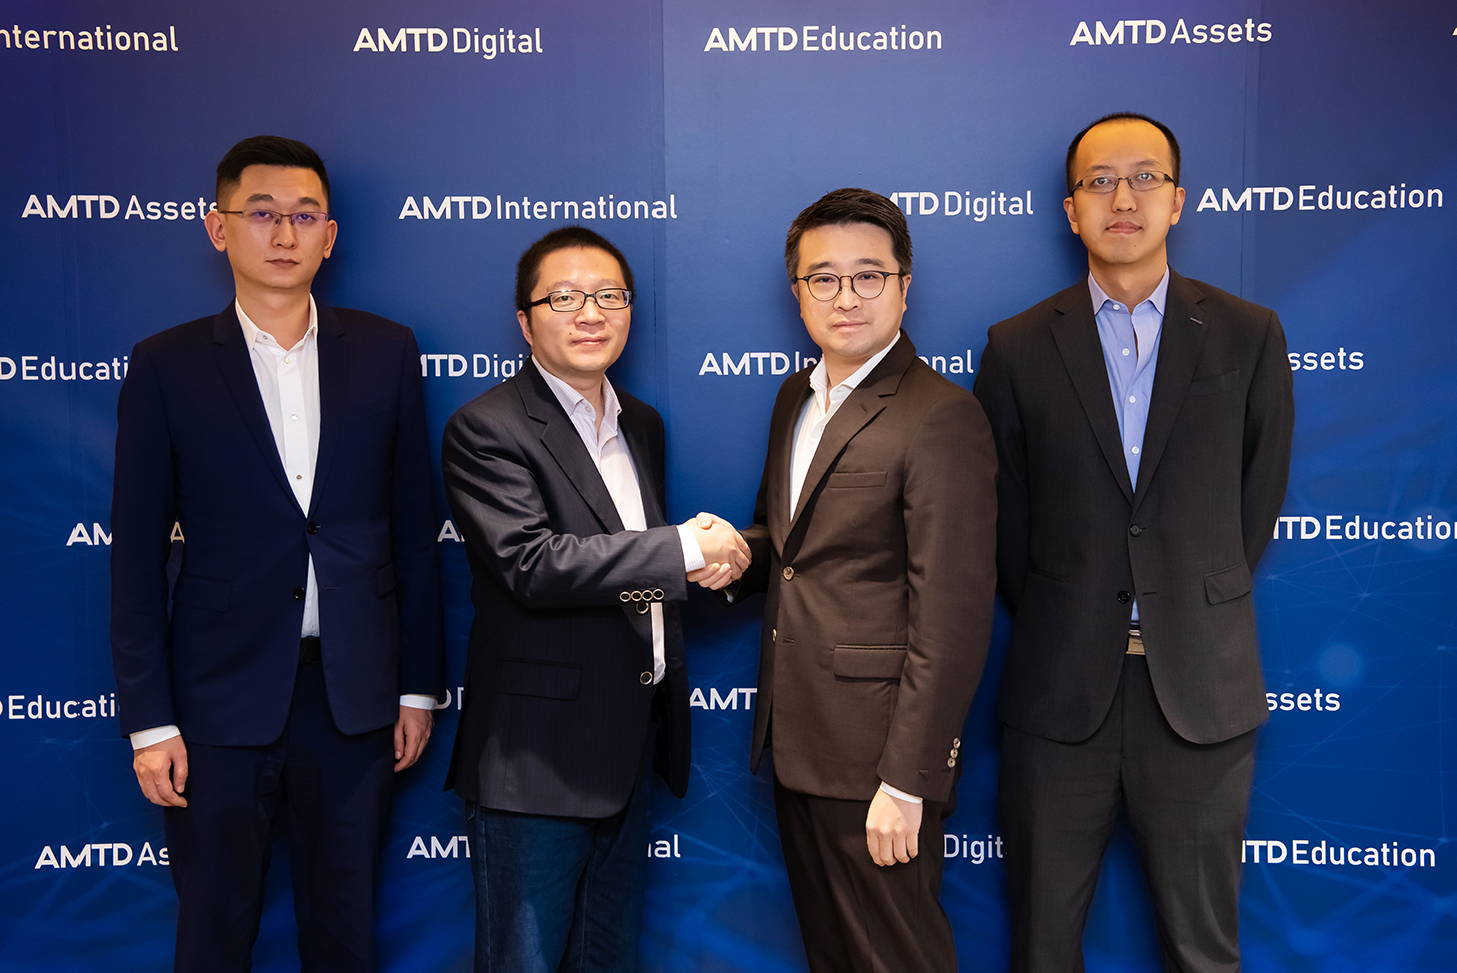 AMTD News | Xiaomi’s Strategic Investment into AMTD Capital